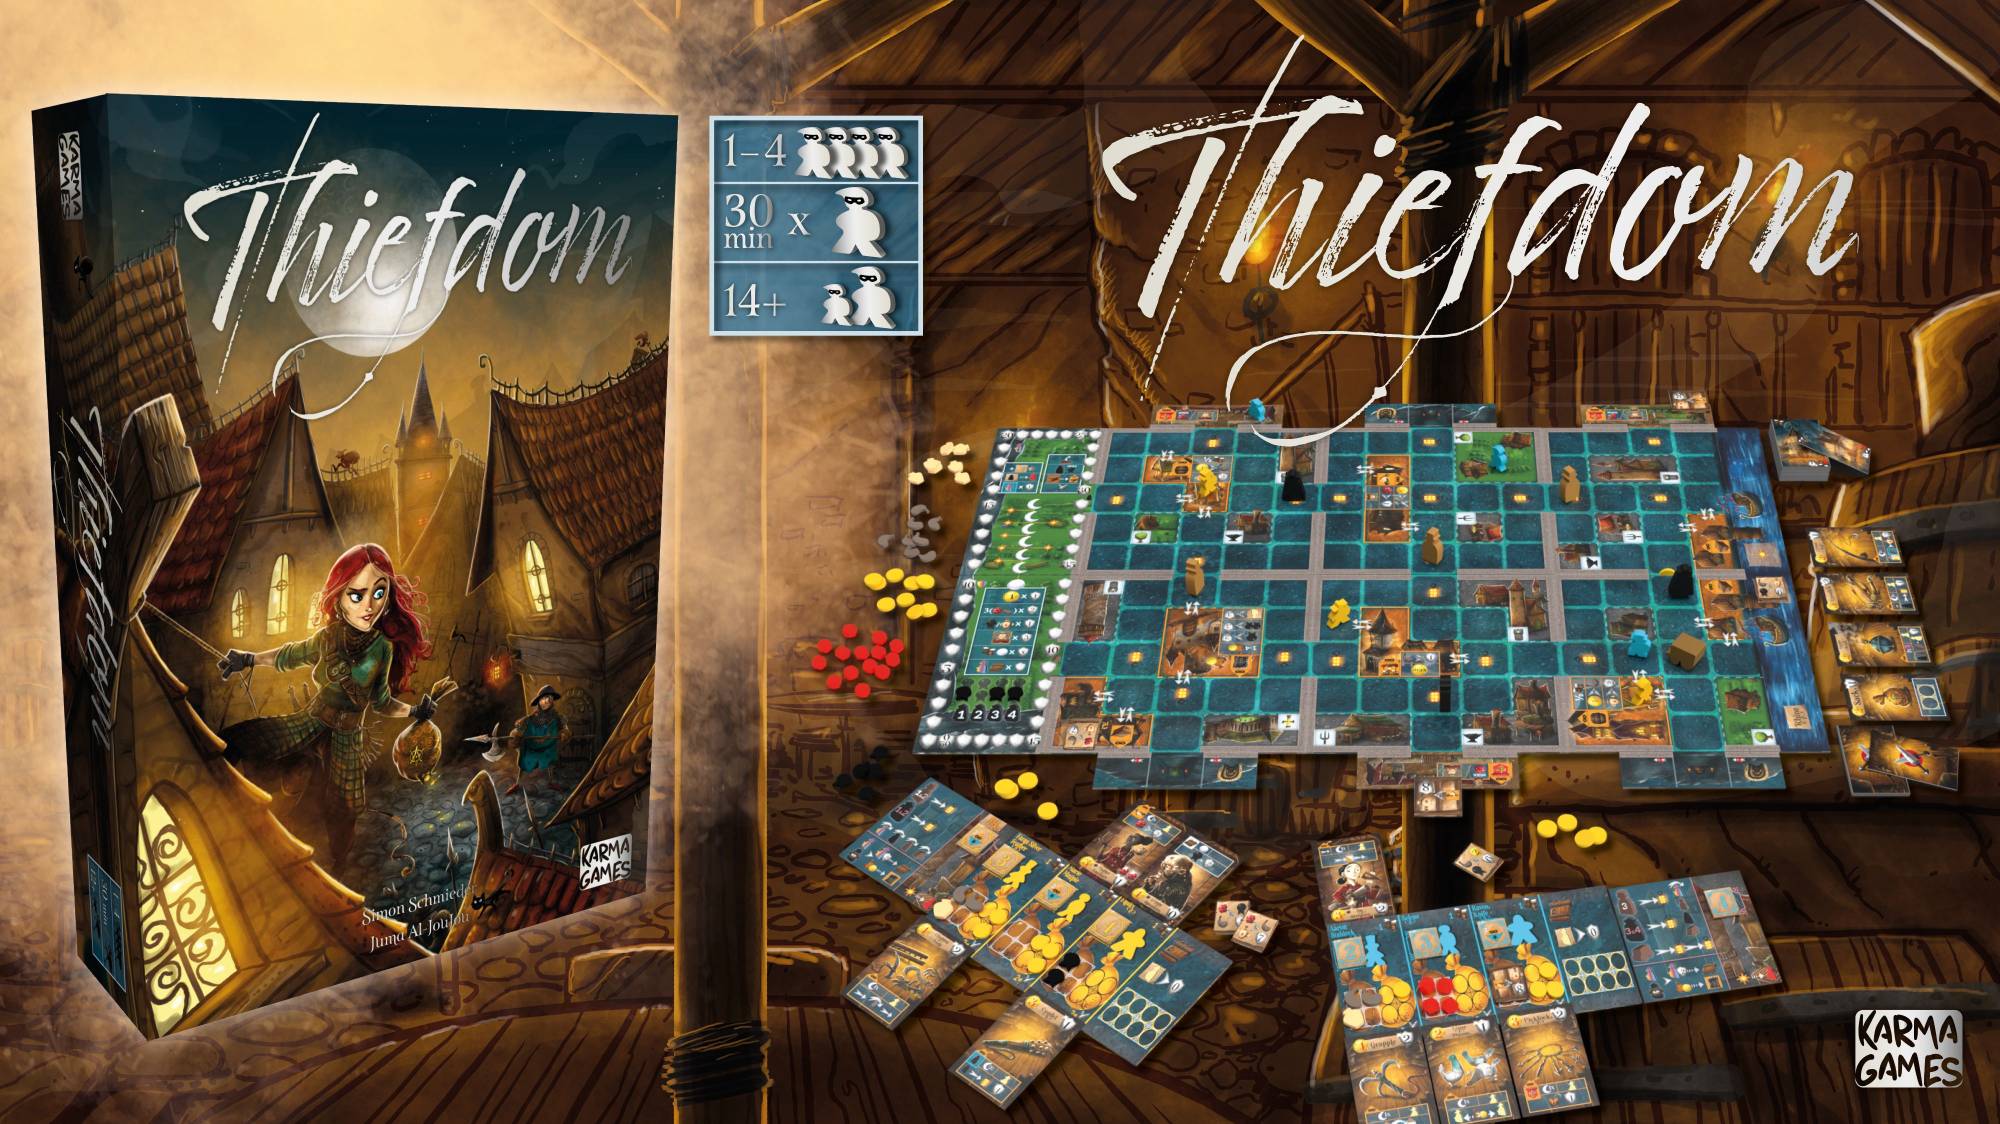 Thiefdom by Karma Games